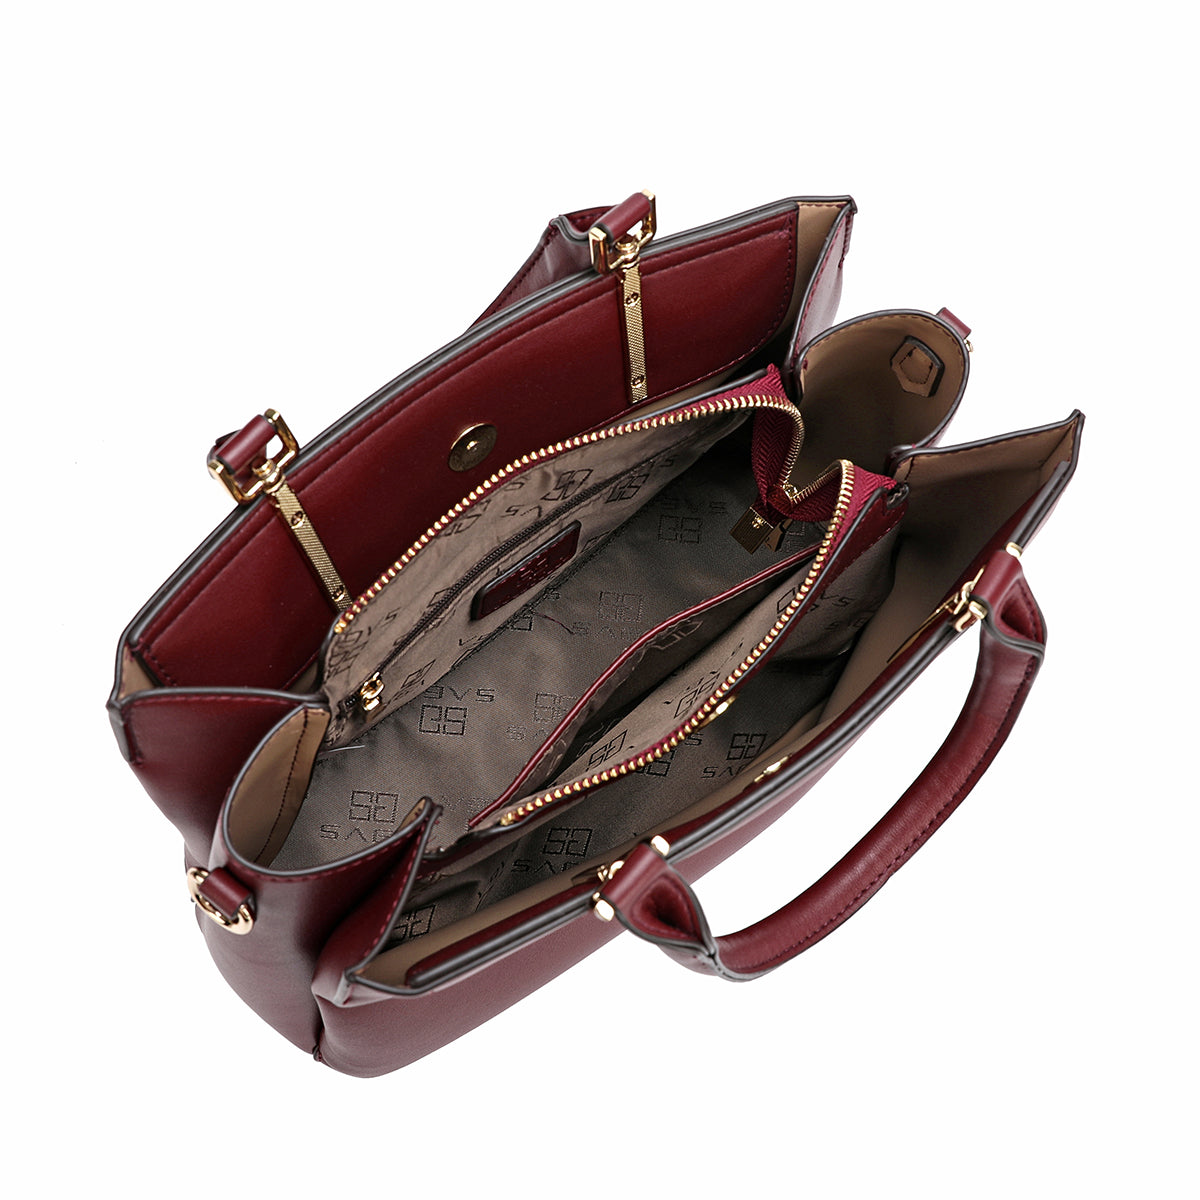 Handbag with a distinctive pattern, width 27 cm, maroon or dark red